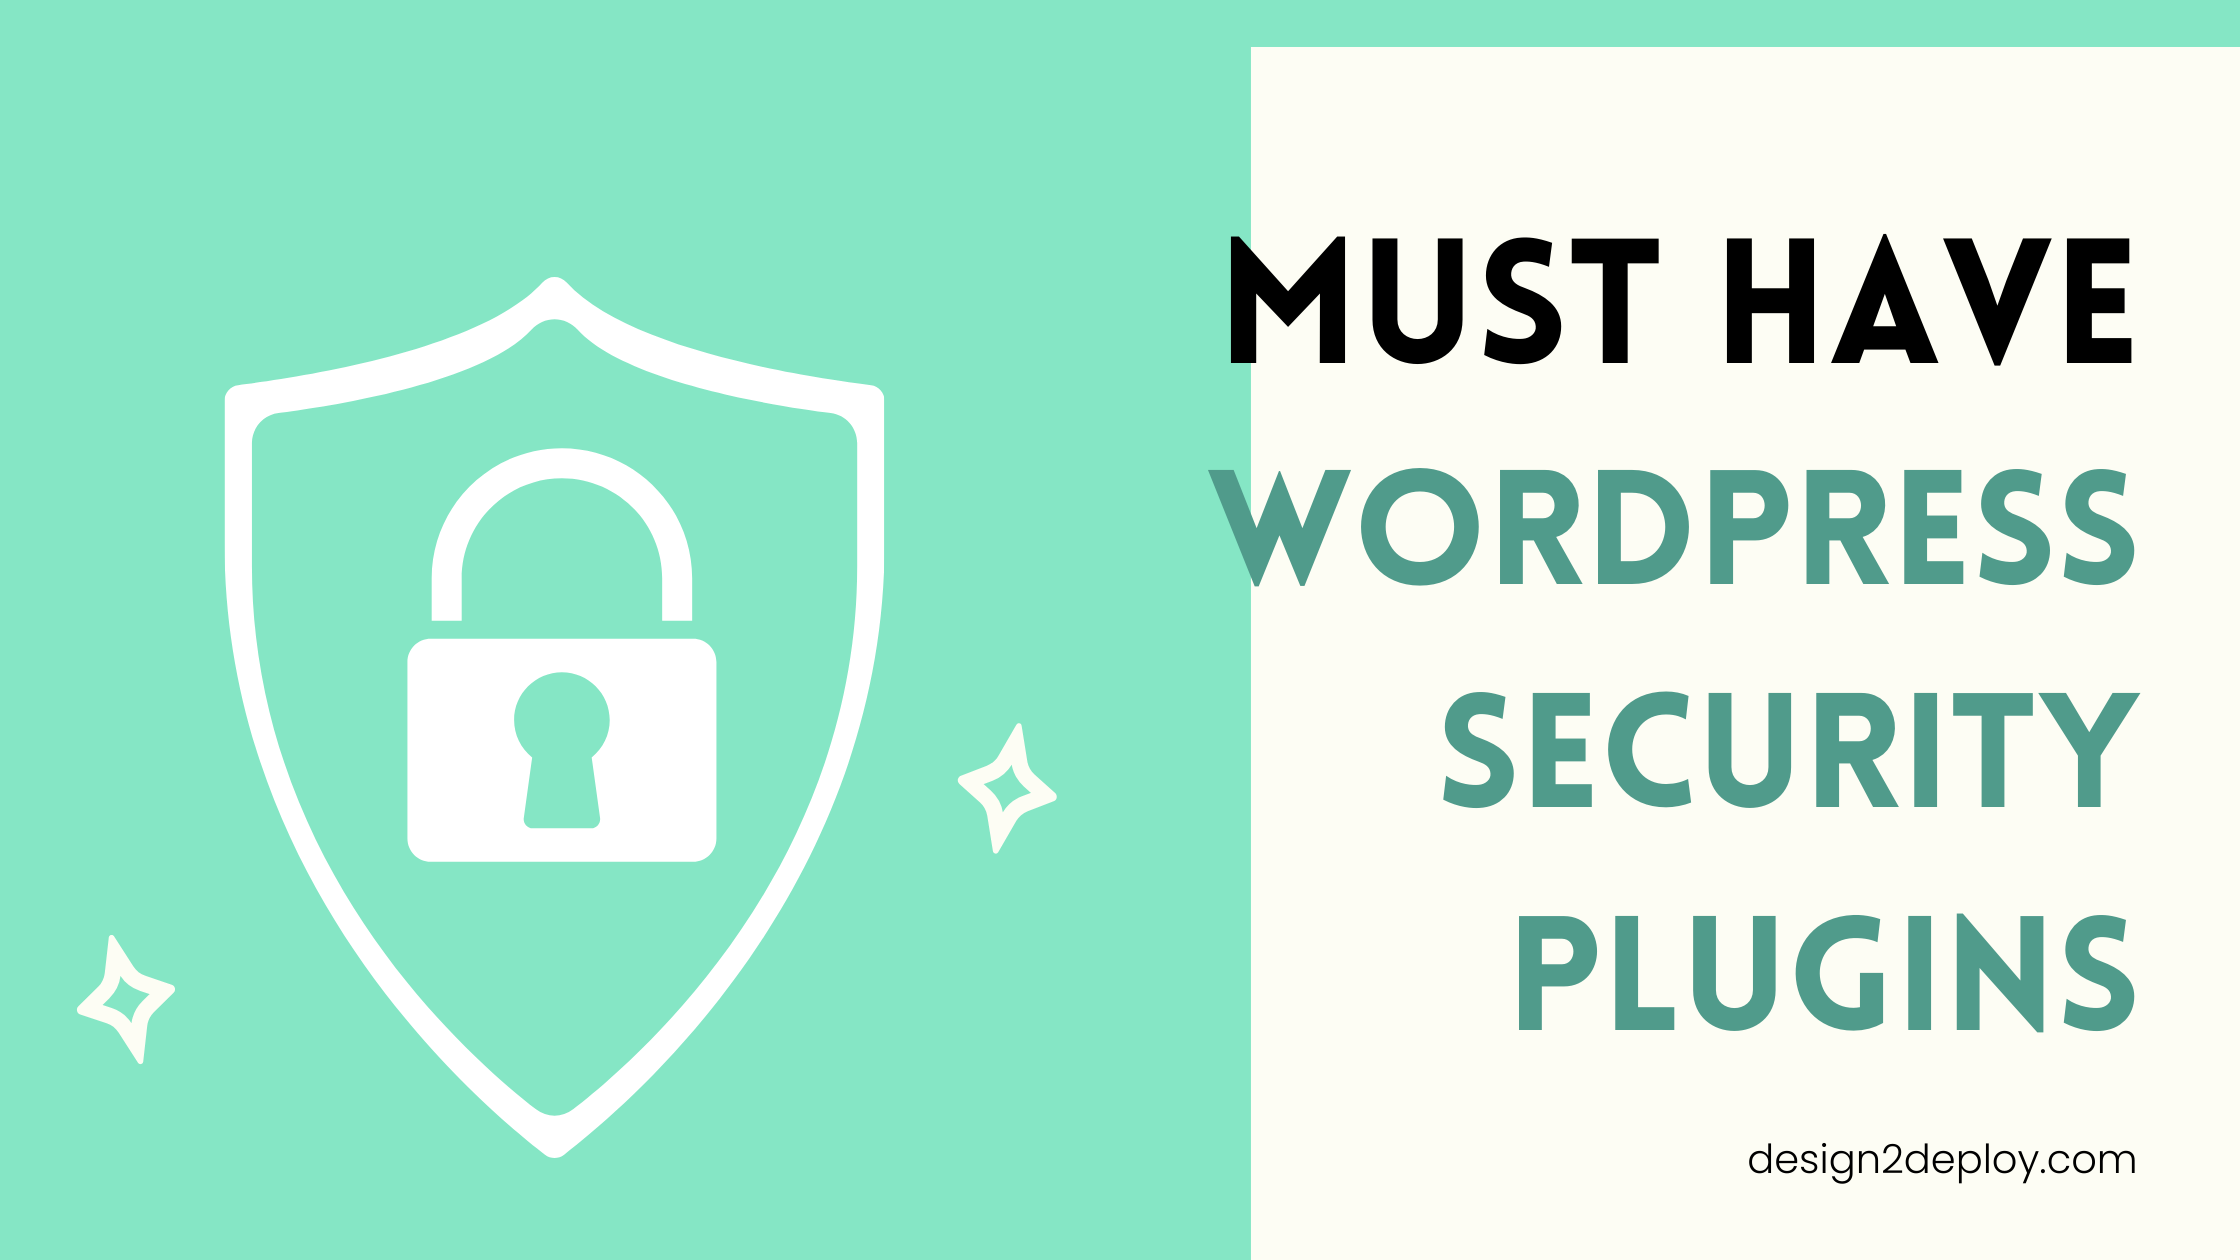 Must have WordPress Security Plugins